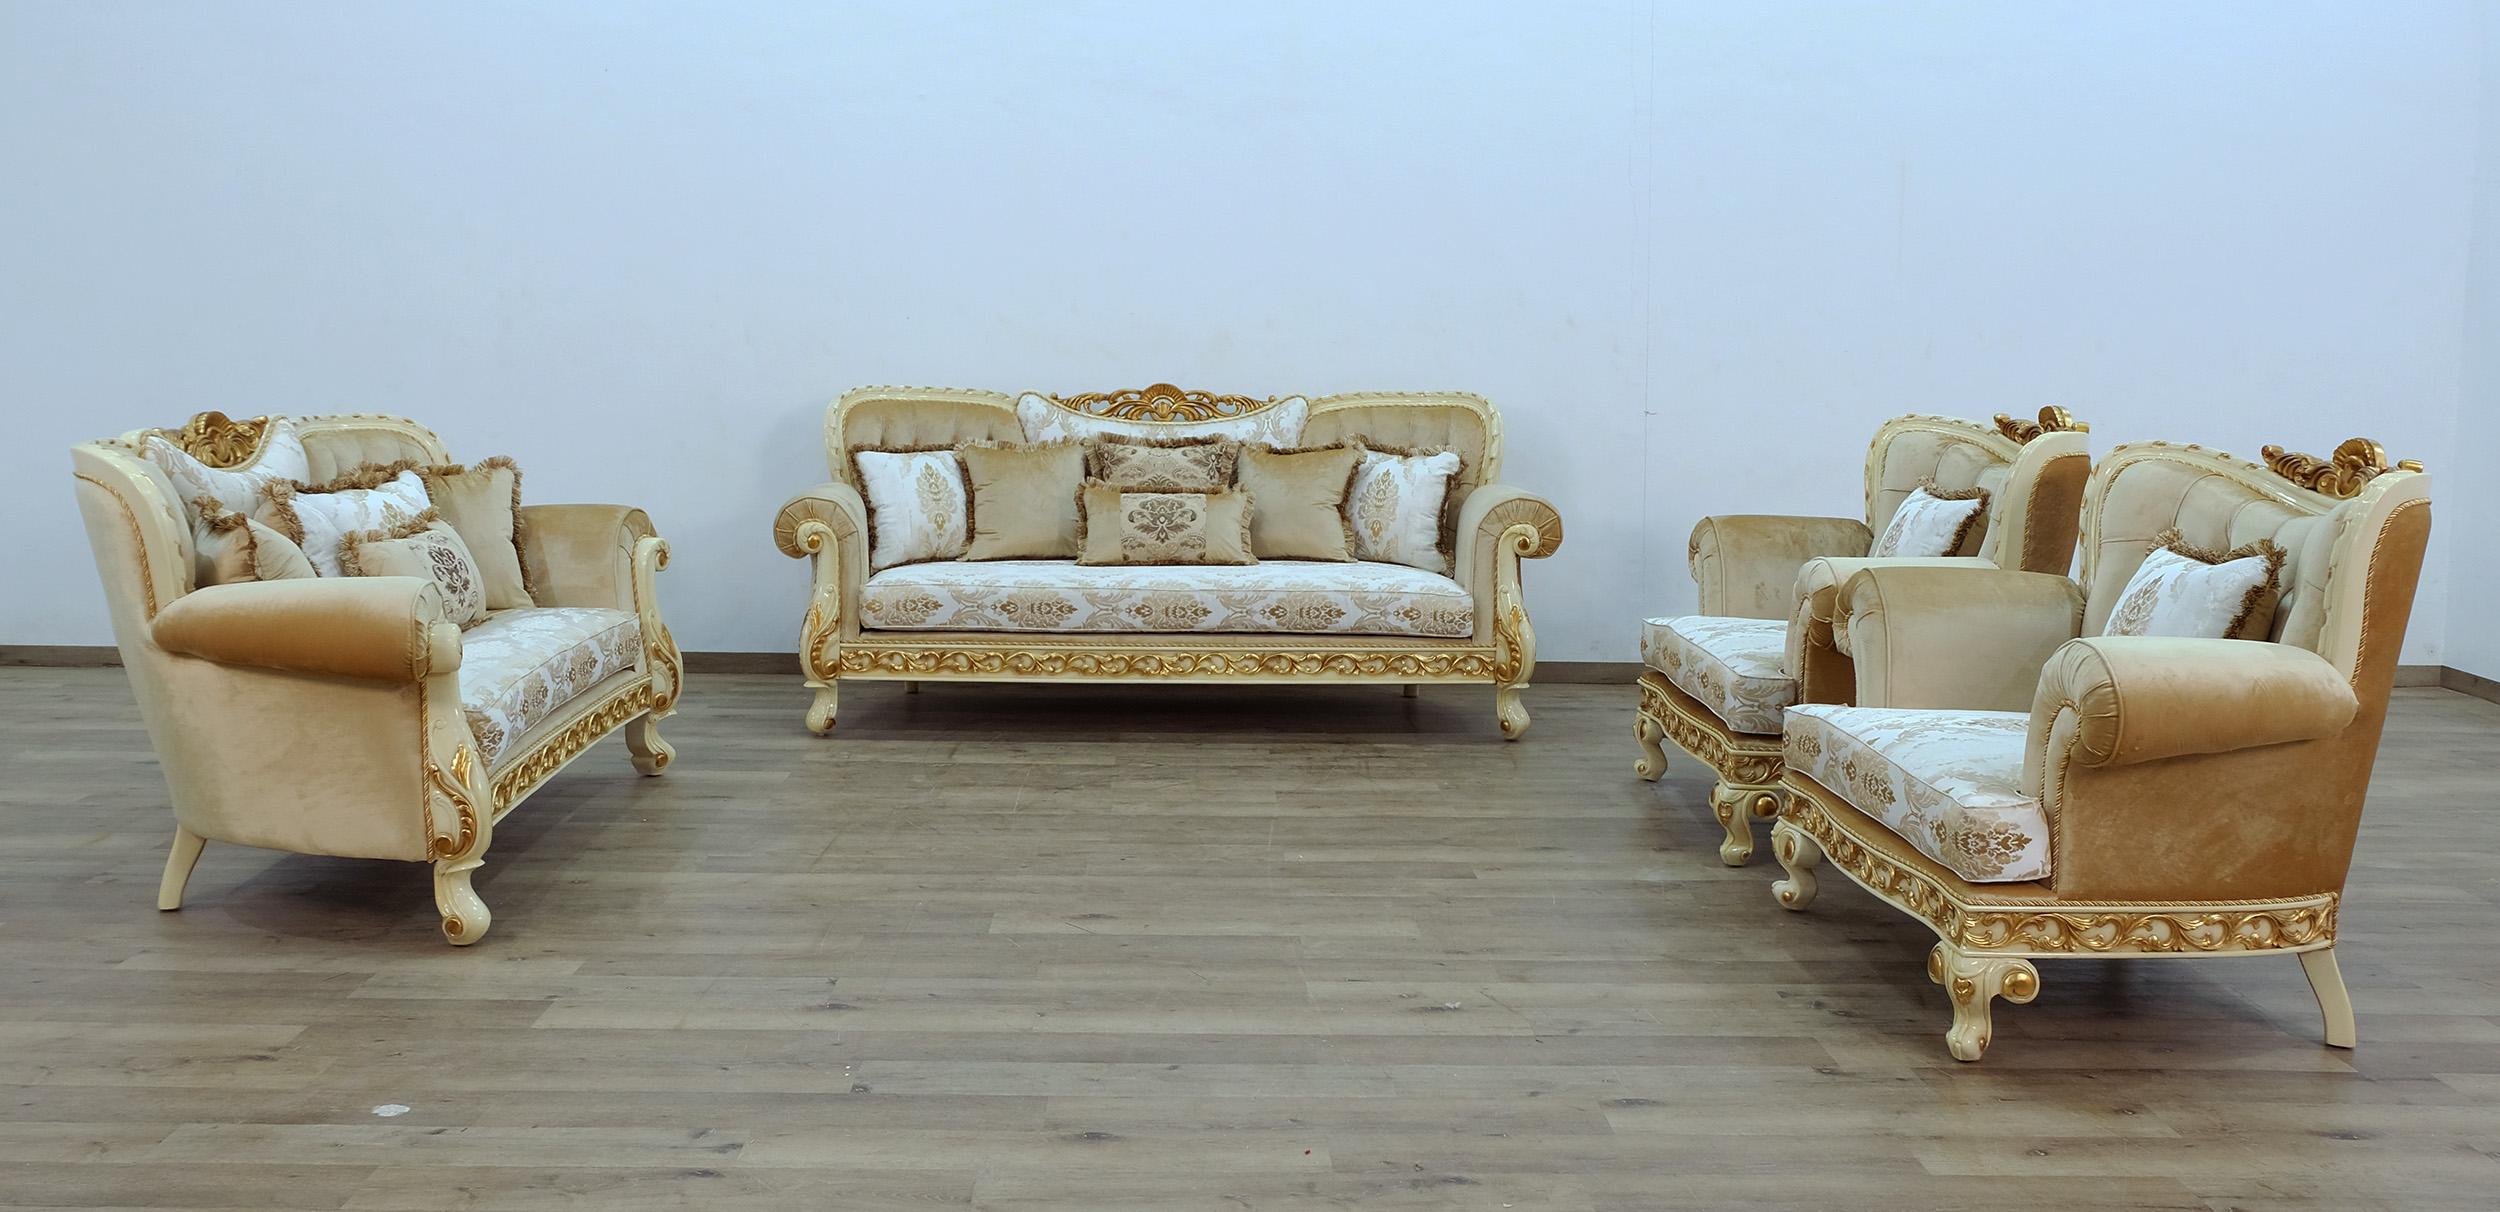 

    
 Order  Luxury Gold & Off White Wood Trim FANTASIA Loveseat  EUROPEAN FURNITURE Classic
